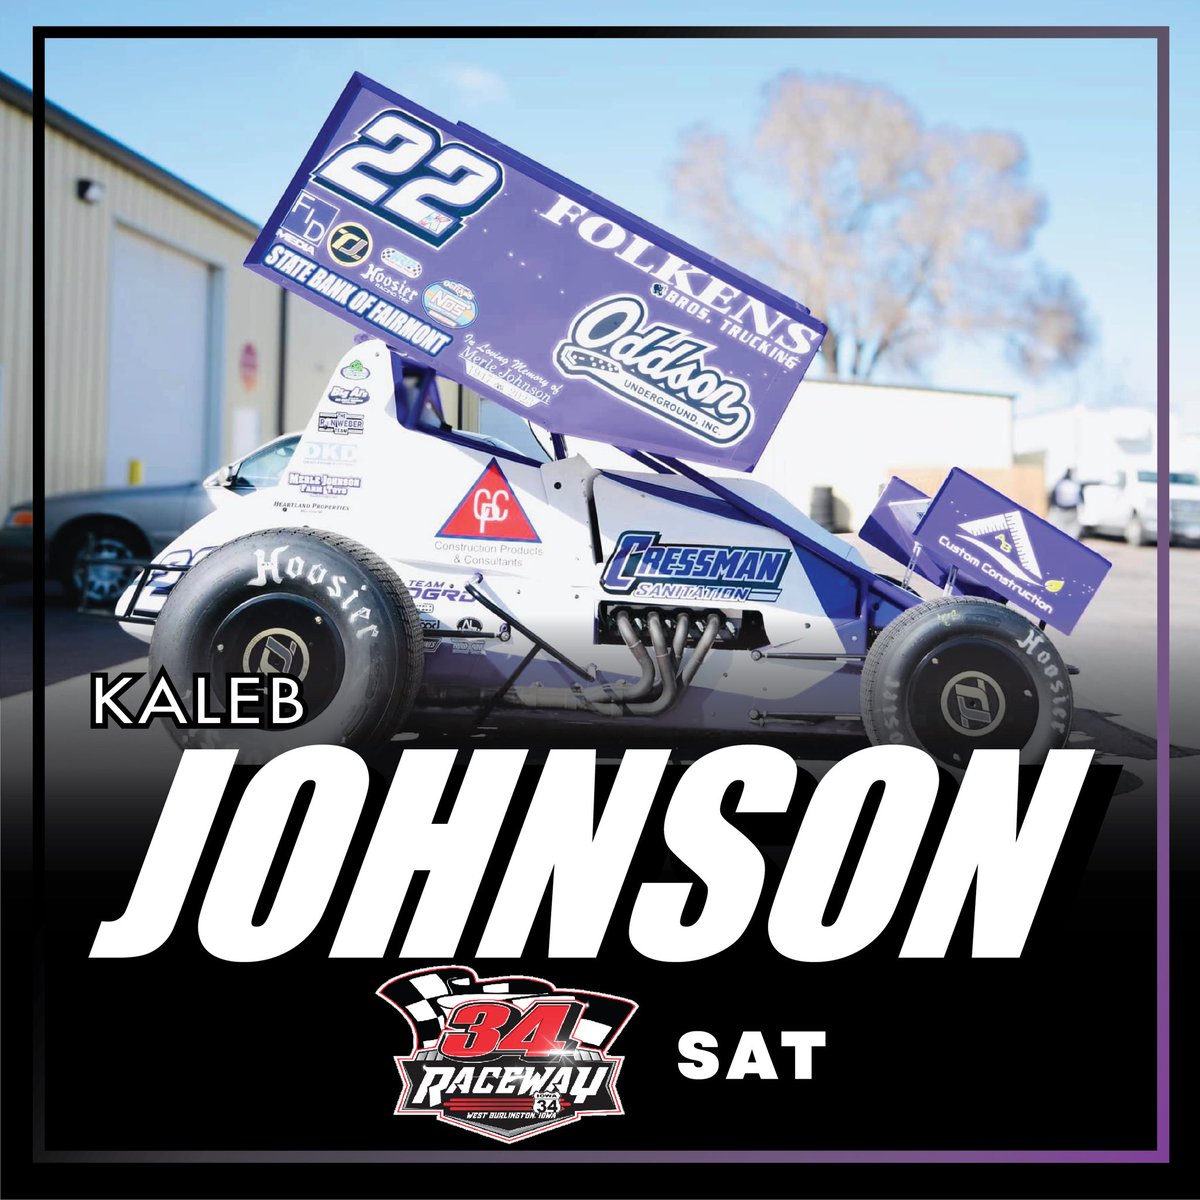 The racing season starts this Saturday for @Kaleb___Johnson! #TeamILP